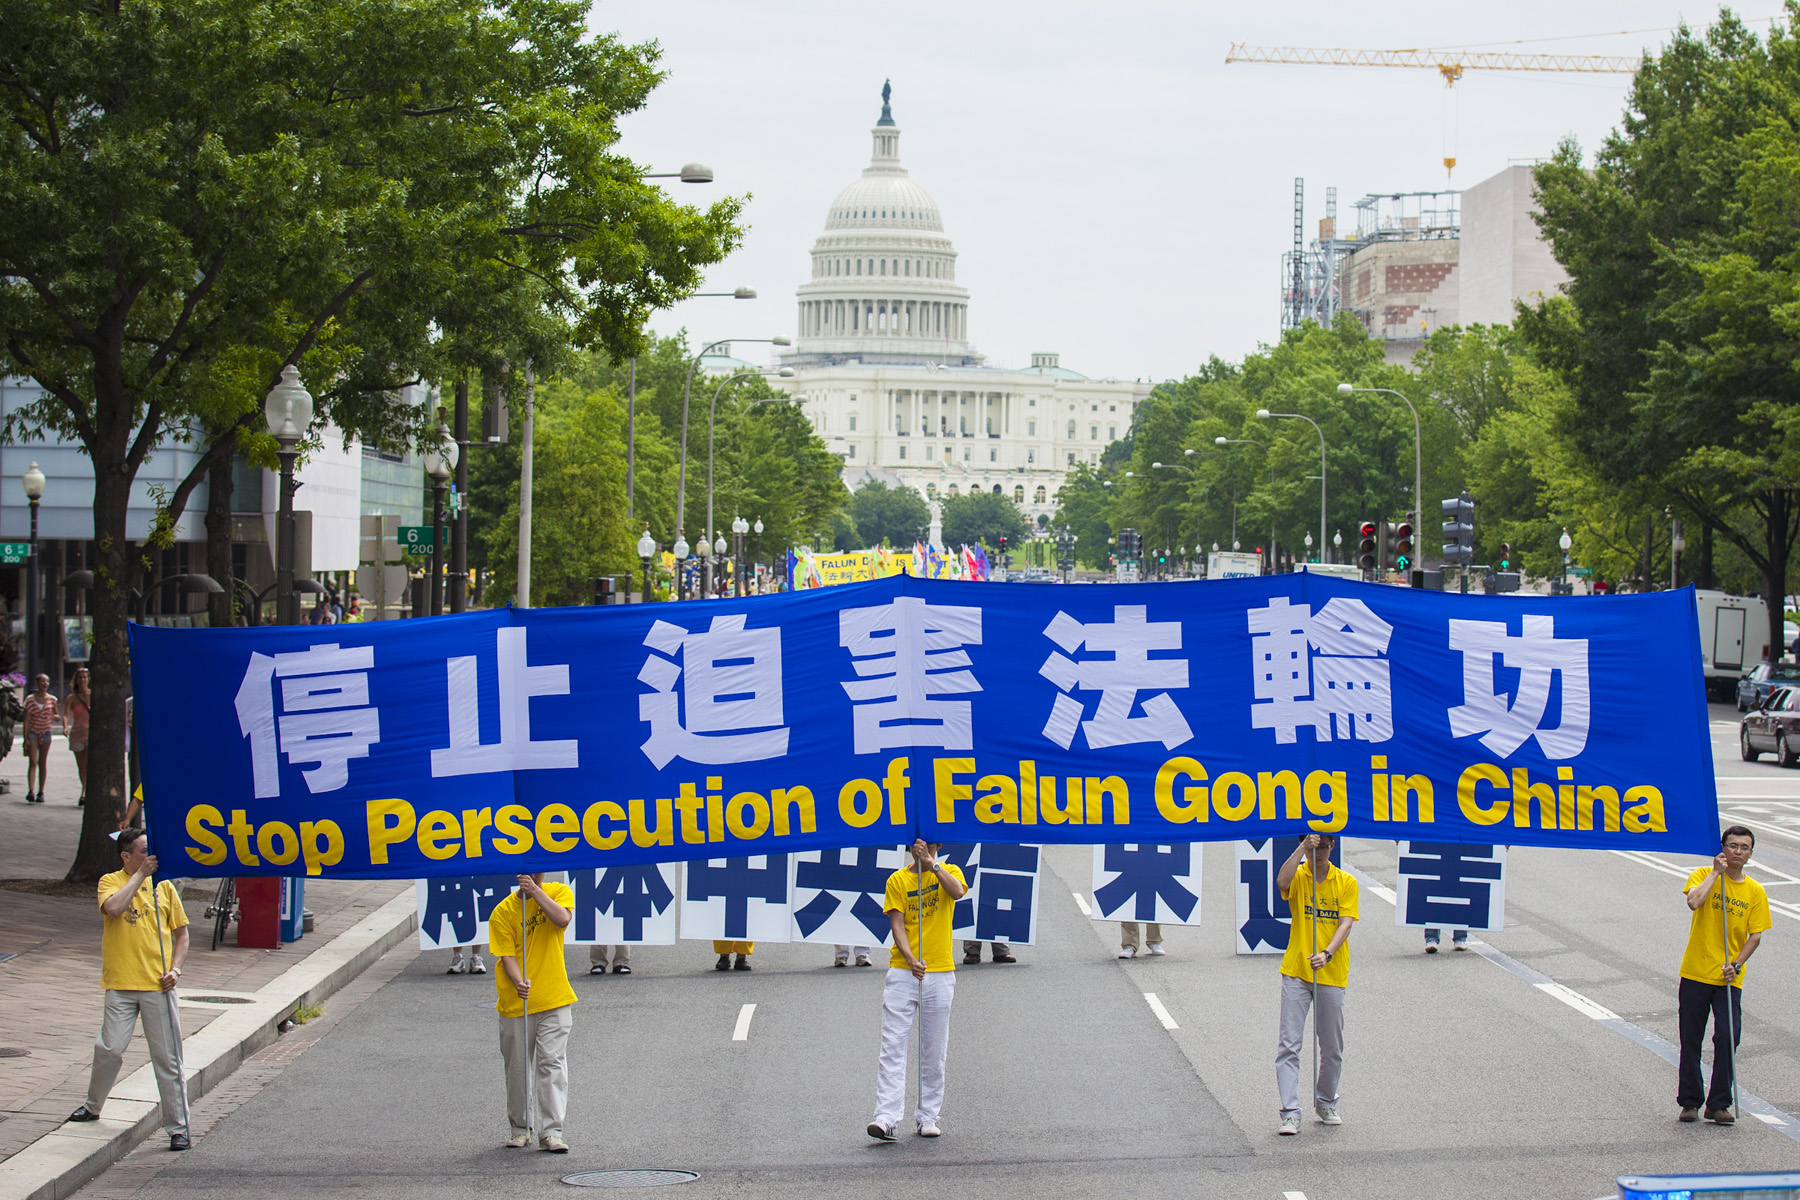 StopPersecutionOfFalunGongInChina-2012-7-14-cmh-dc-parade-01